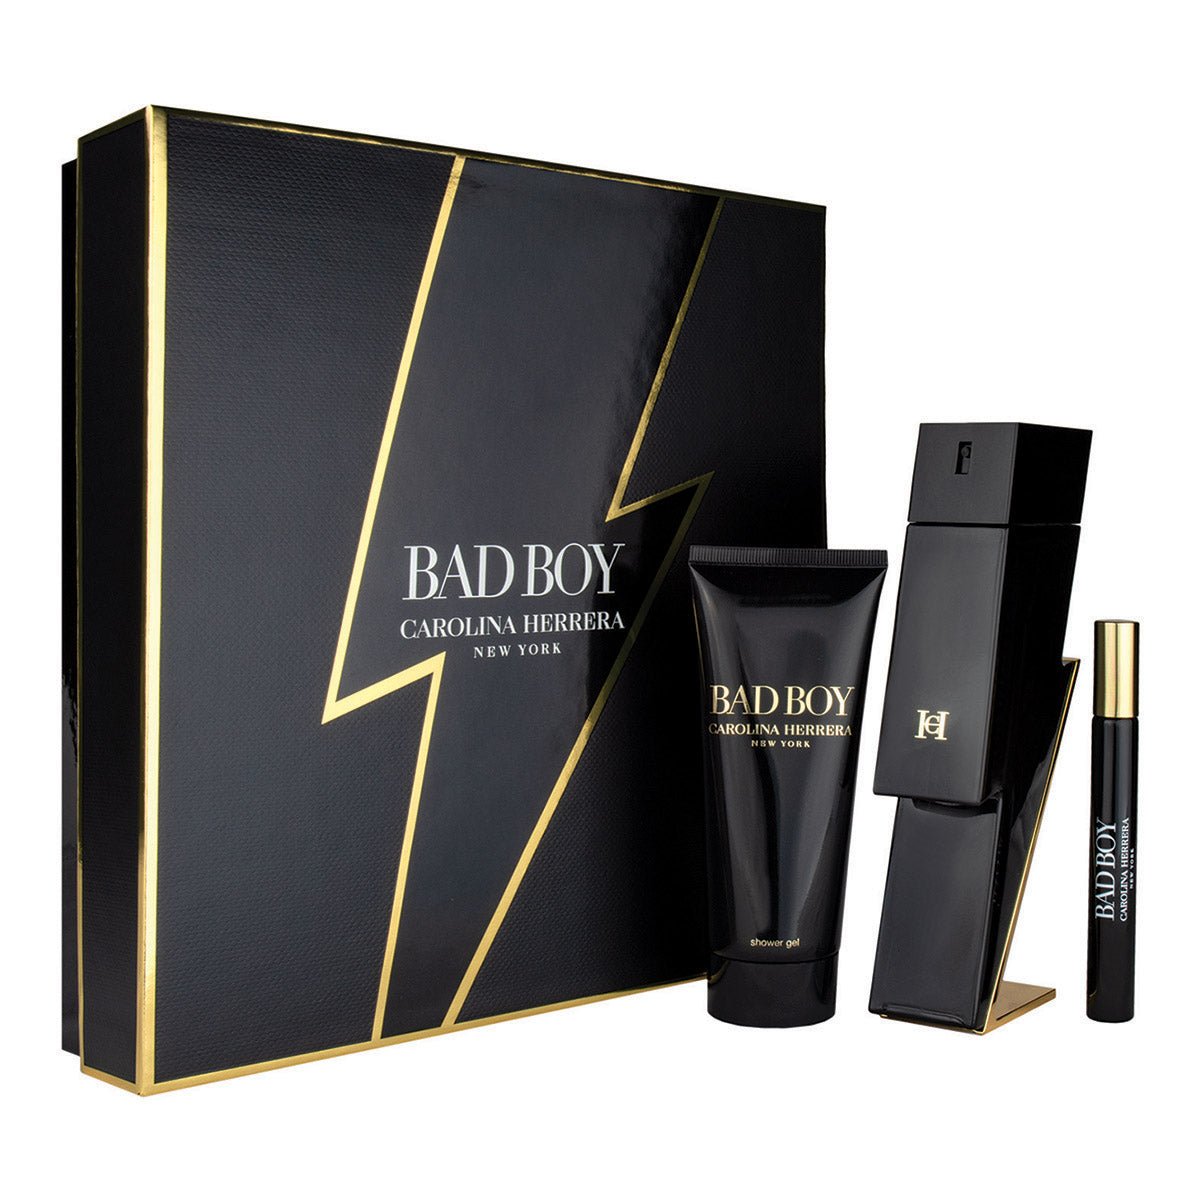 Carolina Herrera Bad Boy EDT Deluxe Gift Set | My Perfume Shop Australia